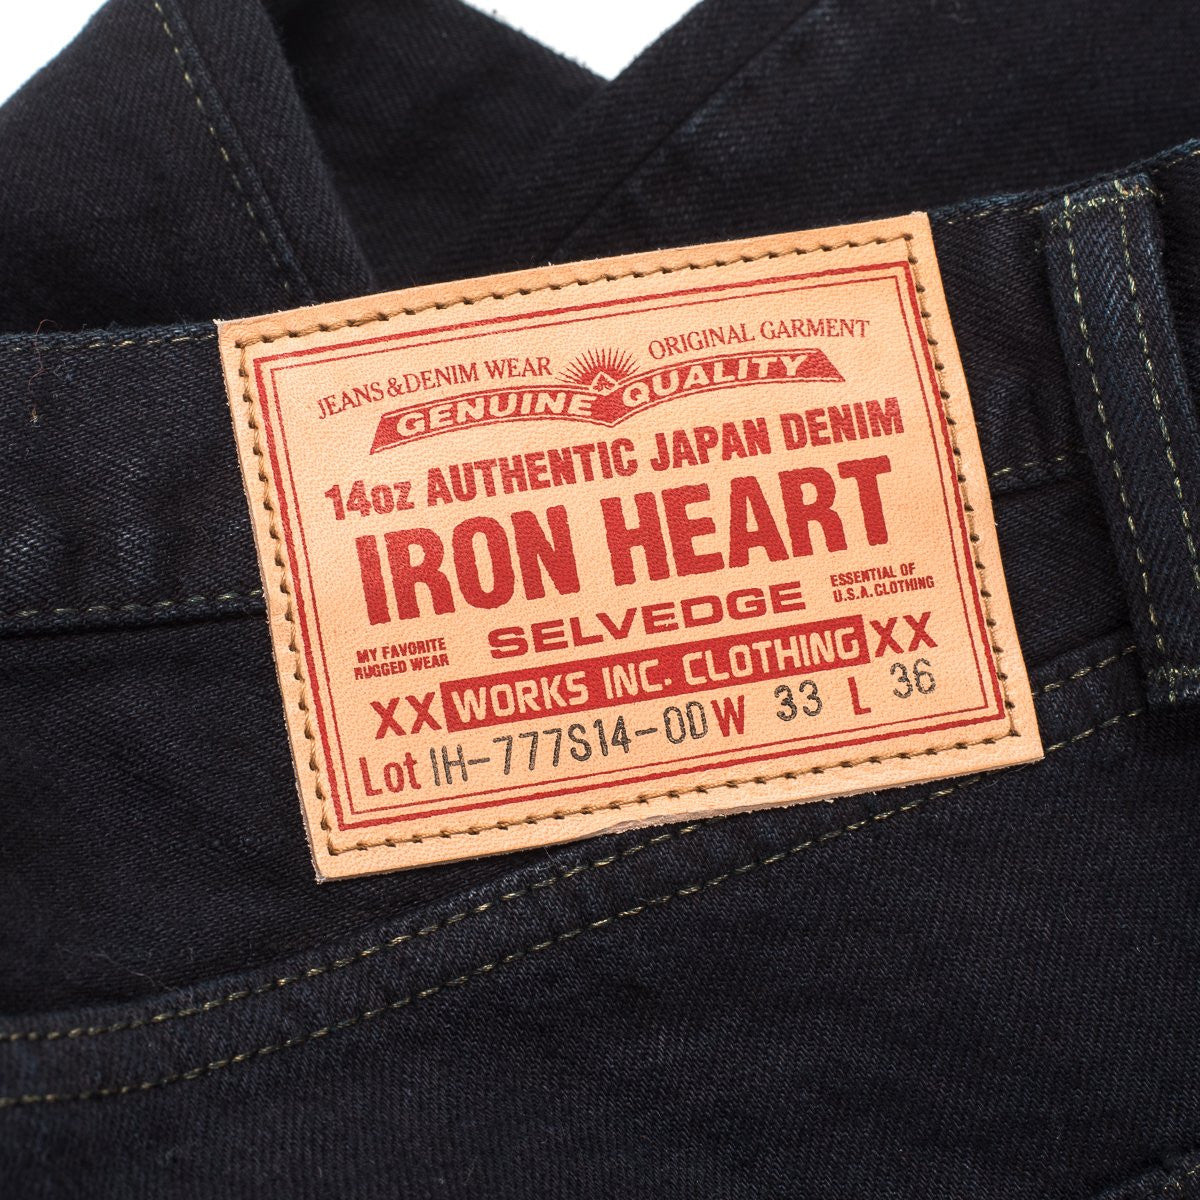 Iron Heart 777S14-OD